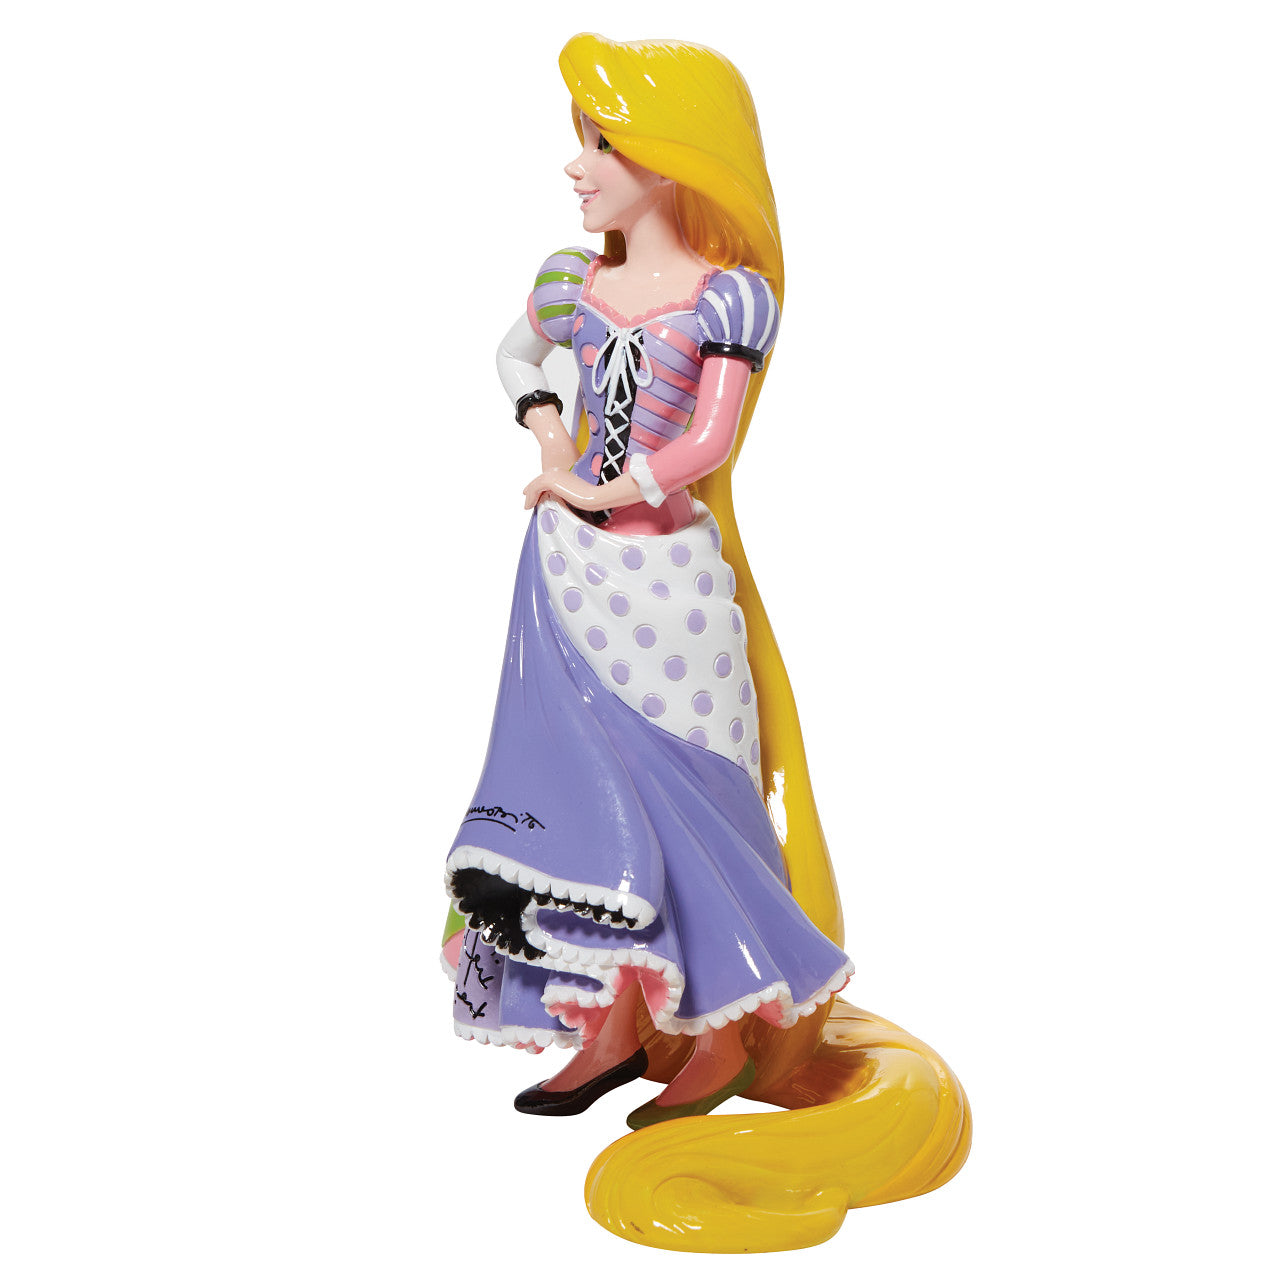 Rapunzel Figurine